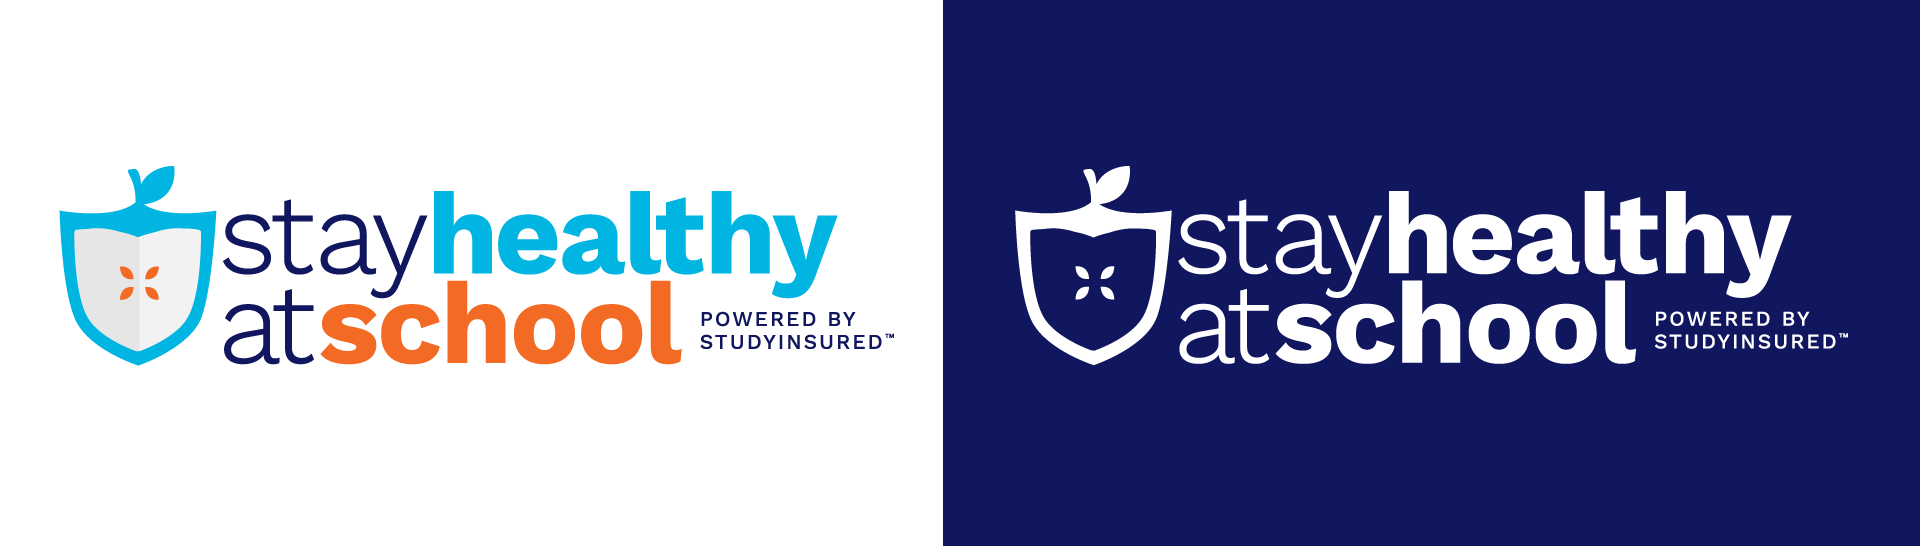 Stay Healthy At School logo treatments